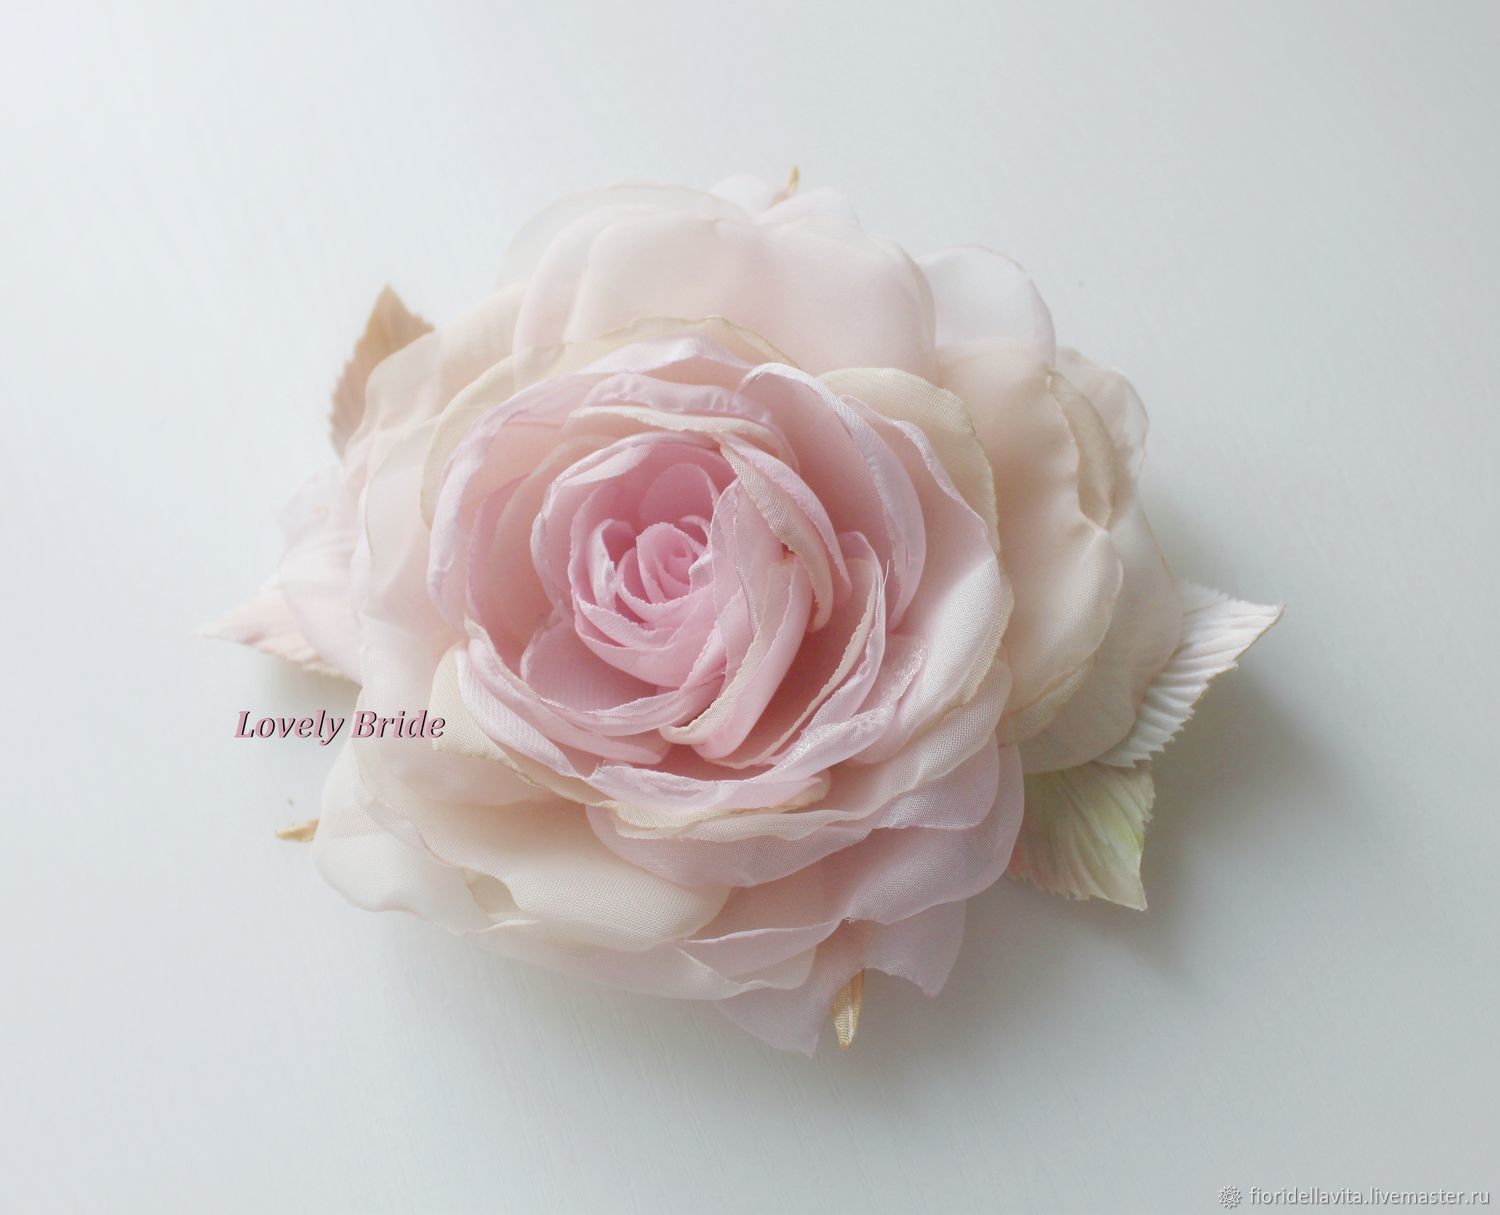 FABRIC FLOWERS Brooch flower chiffon rose ' Lovely Bride', Brooches, Vidnoye,  Фото №1